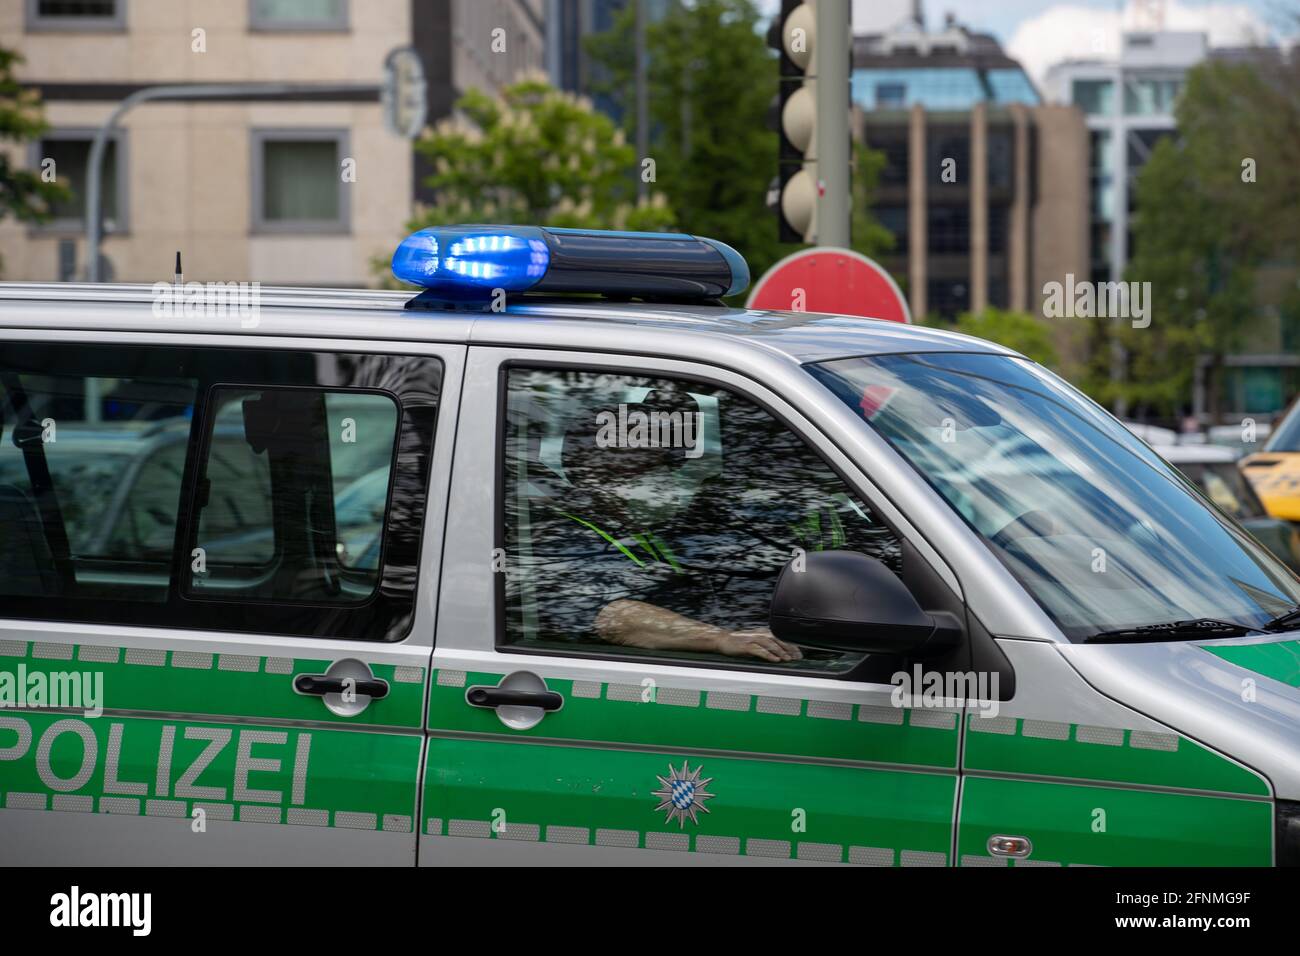 Polizeiwagen mit Blaulicht im Einsatz. -- Police car with bluelight in operation. (Photo by Alexander Pohl/Sipa USA) Credit: Sipa USA/Alamy Live News Stock Photo